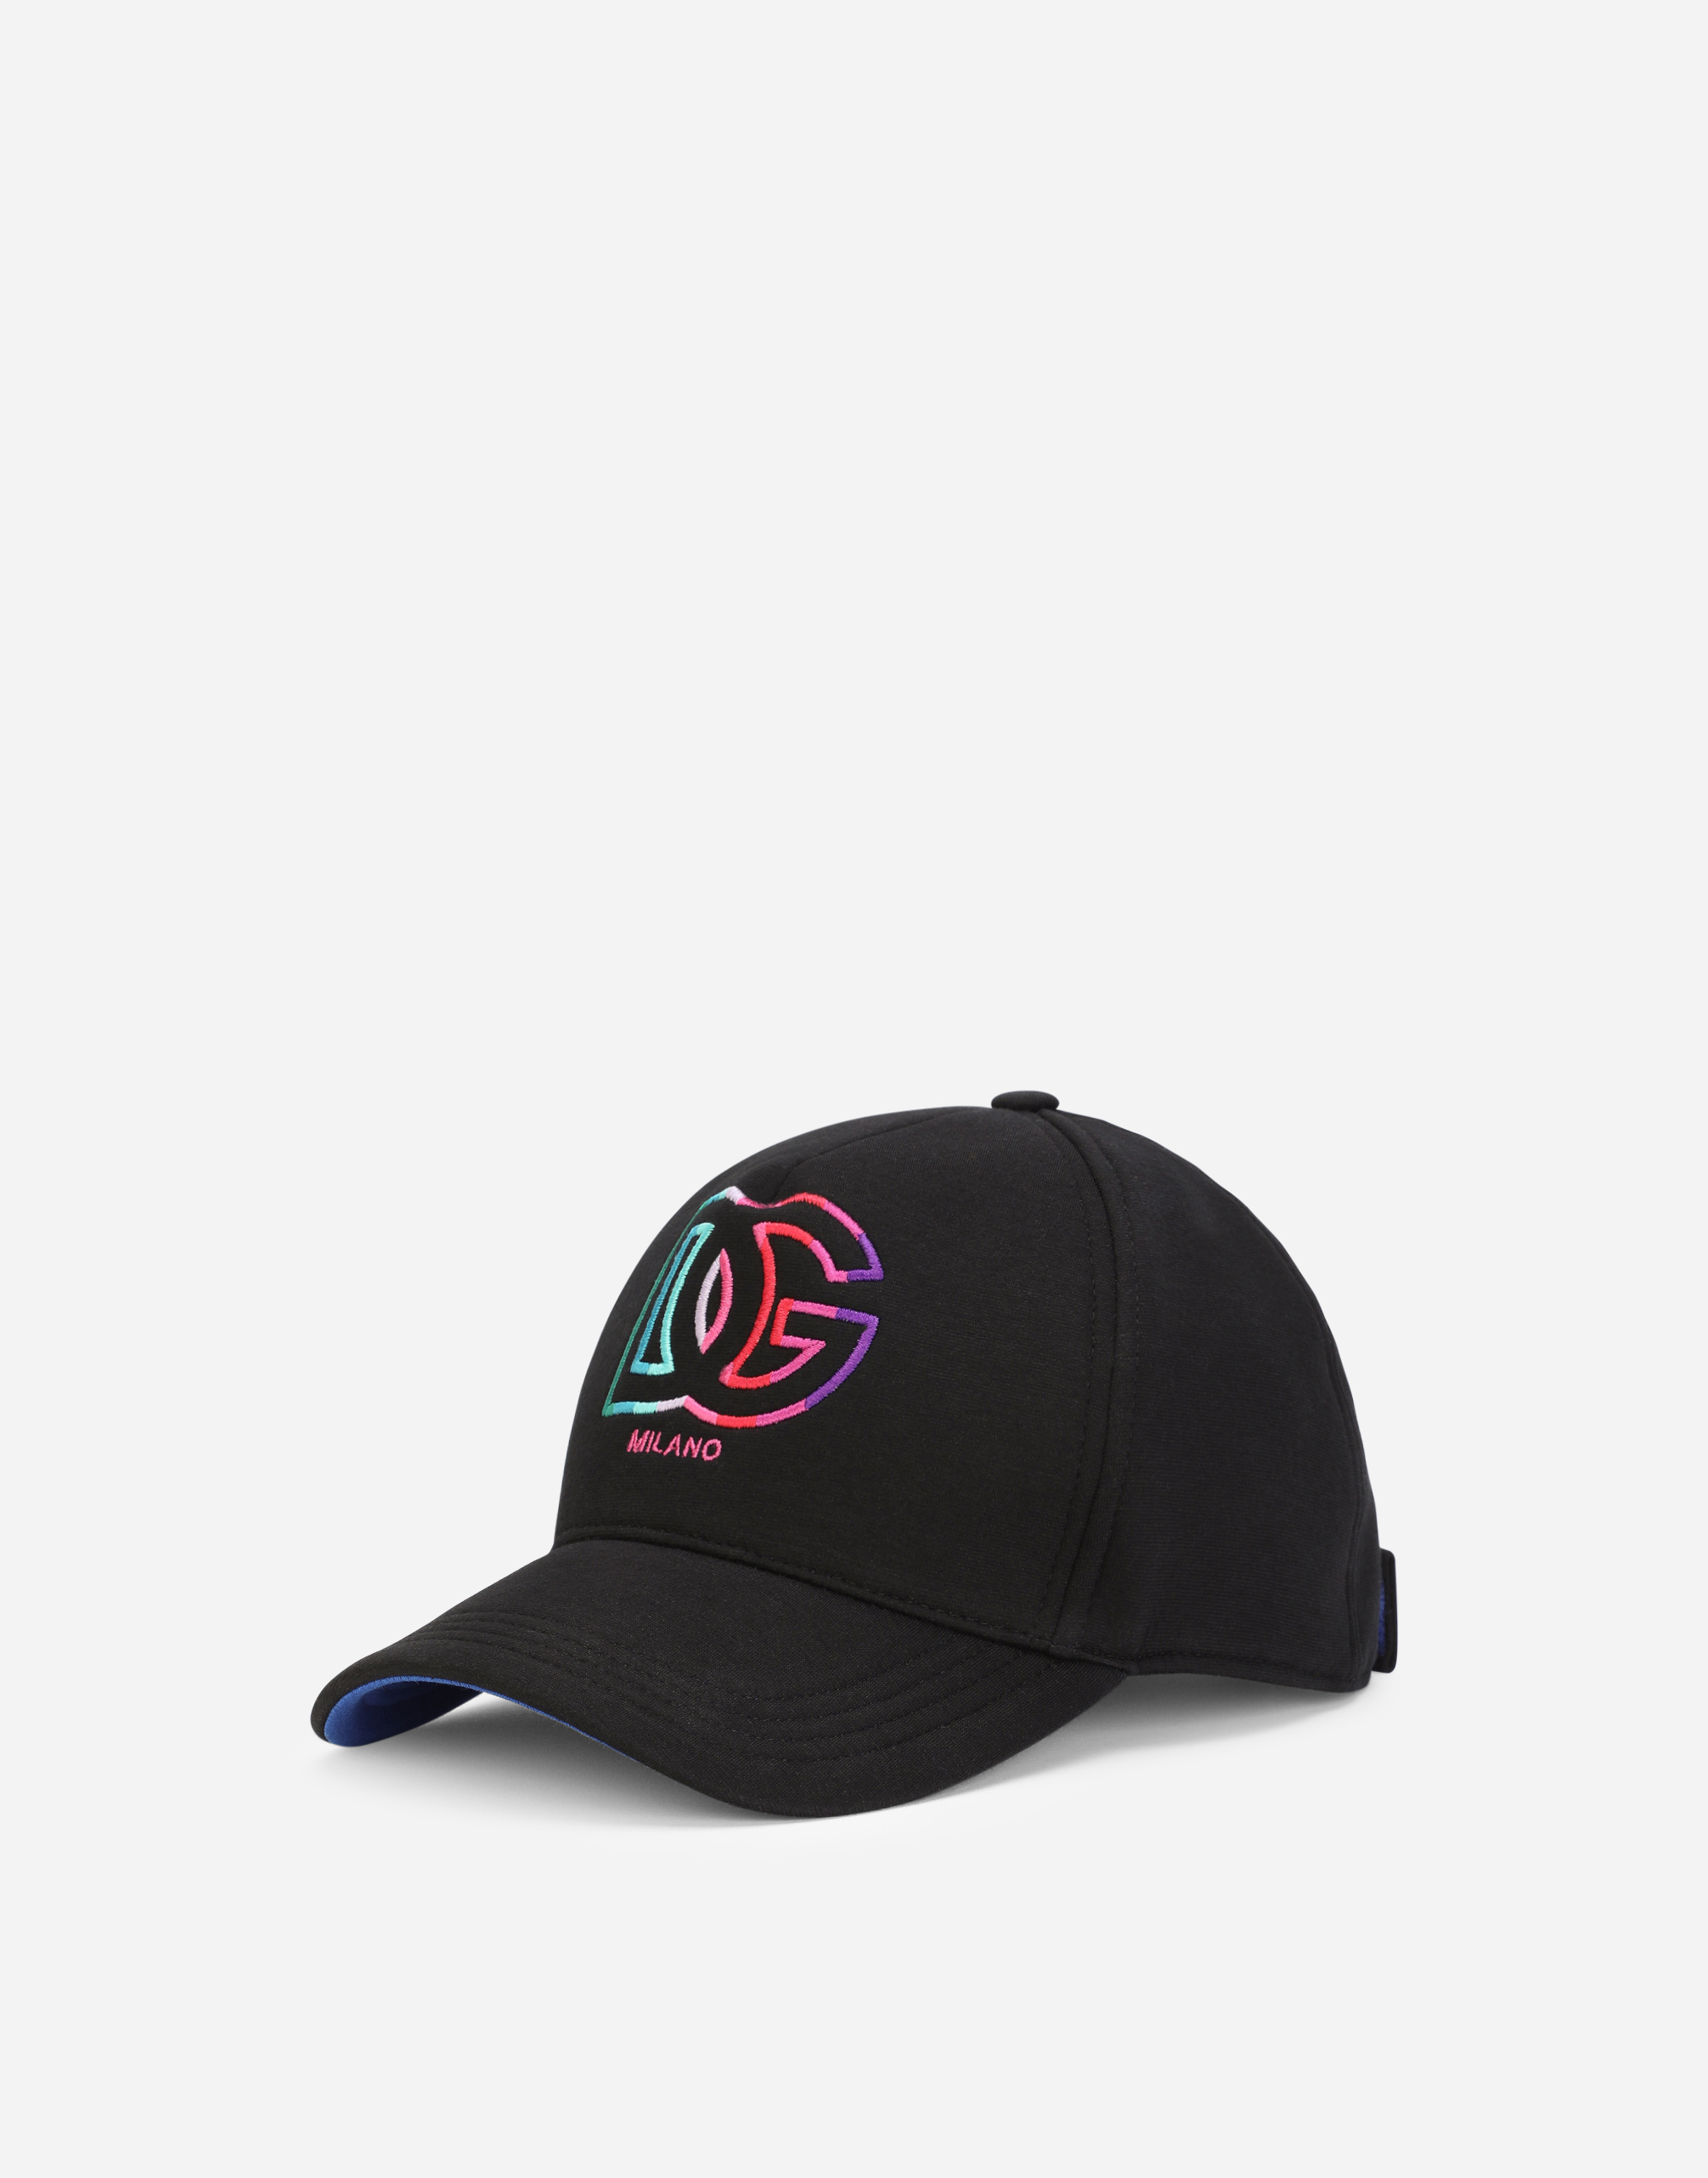 Baseball cap with multi-colored DG embroidery in Multicolor